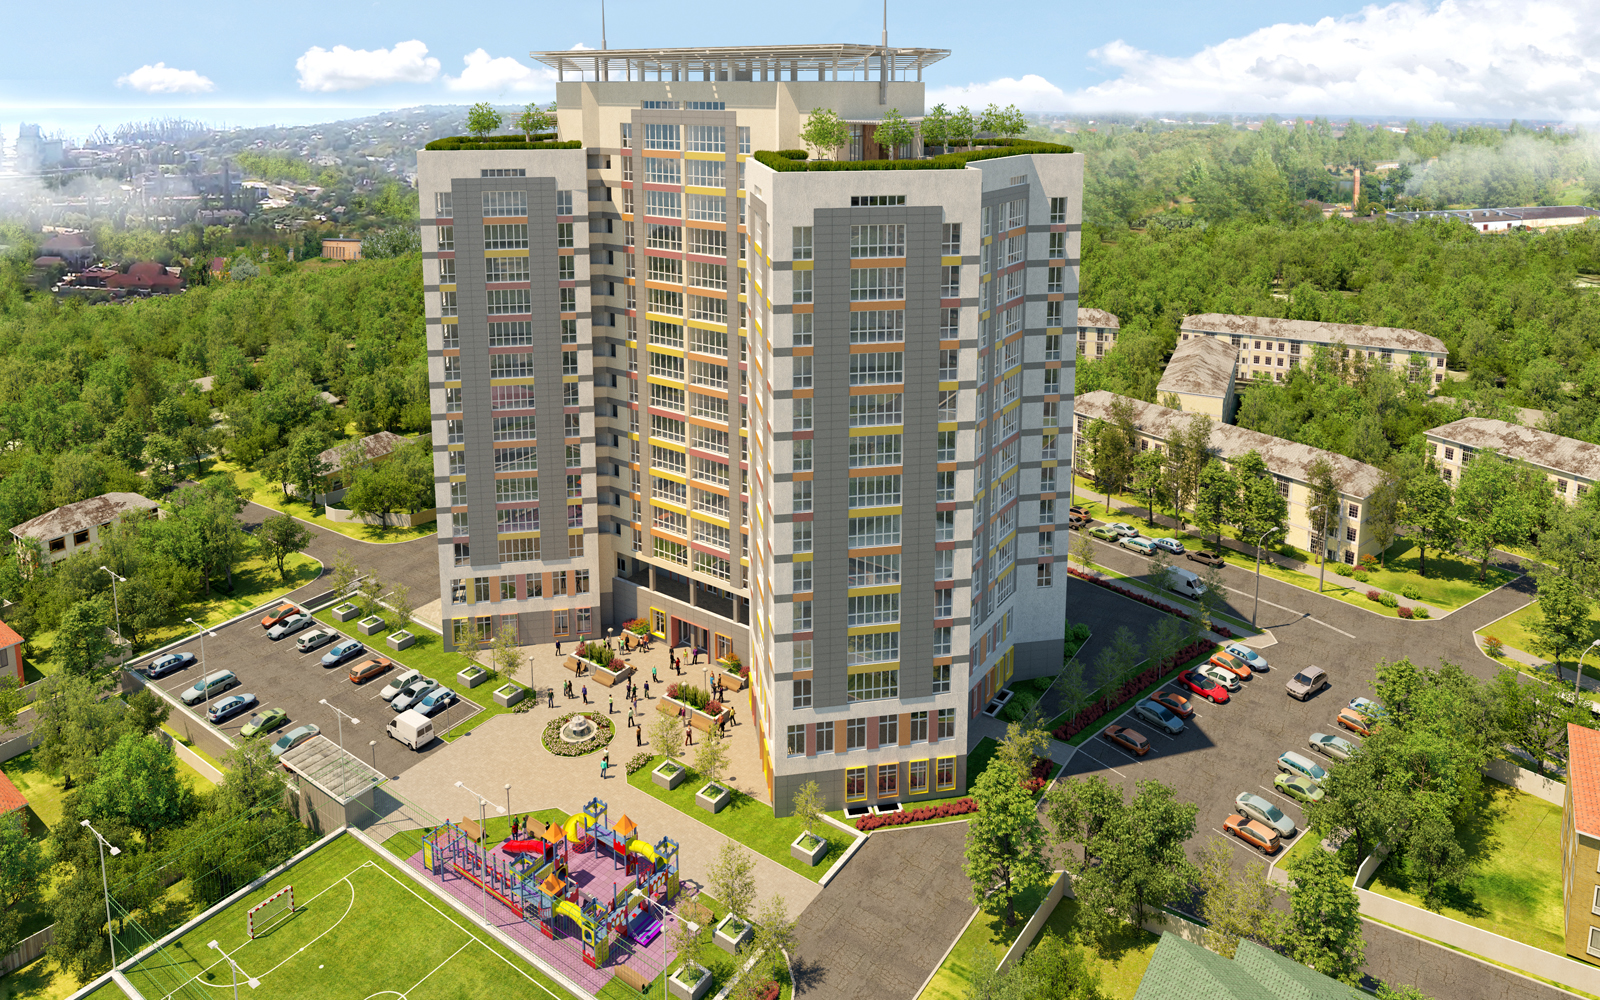 Residential complex "Nobel" in 3d max corona render image